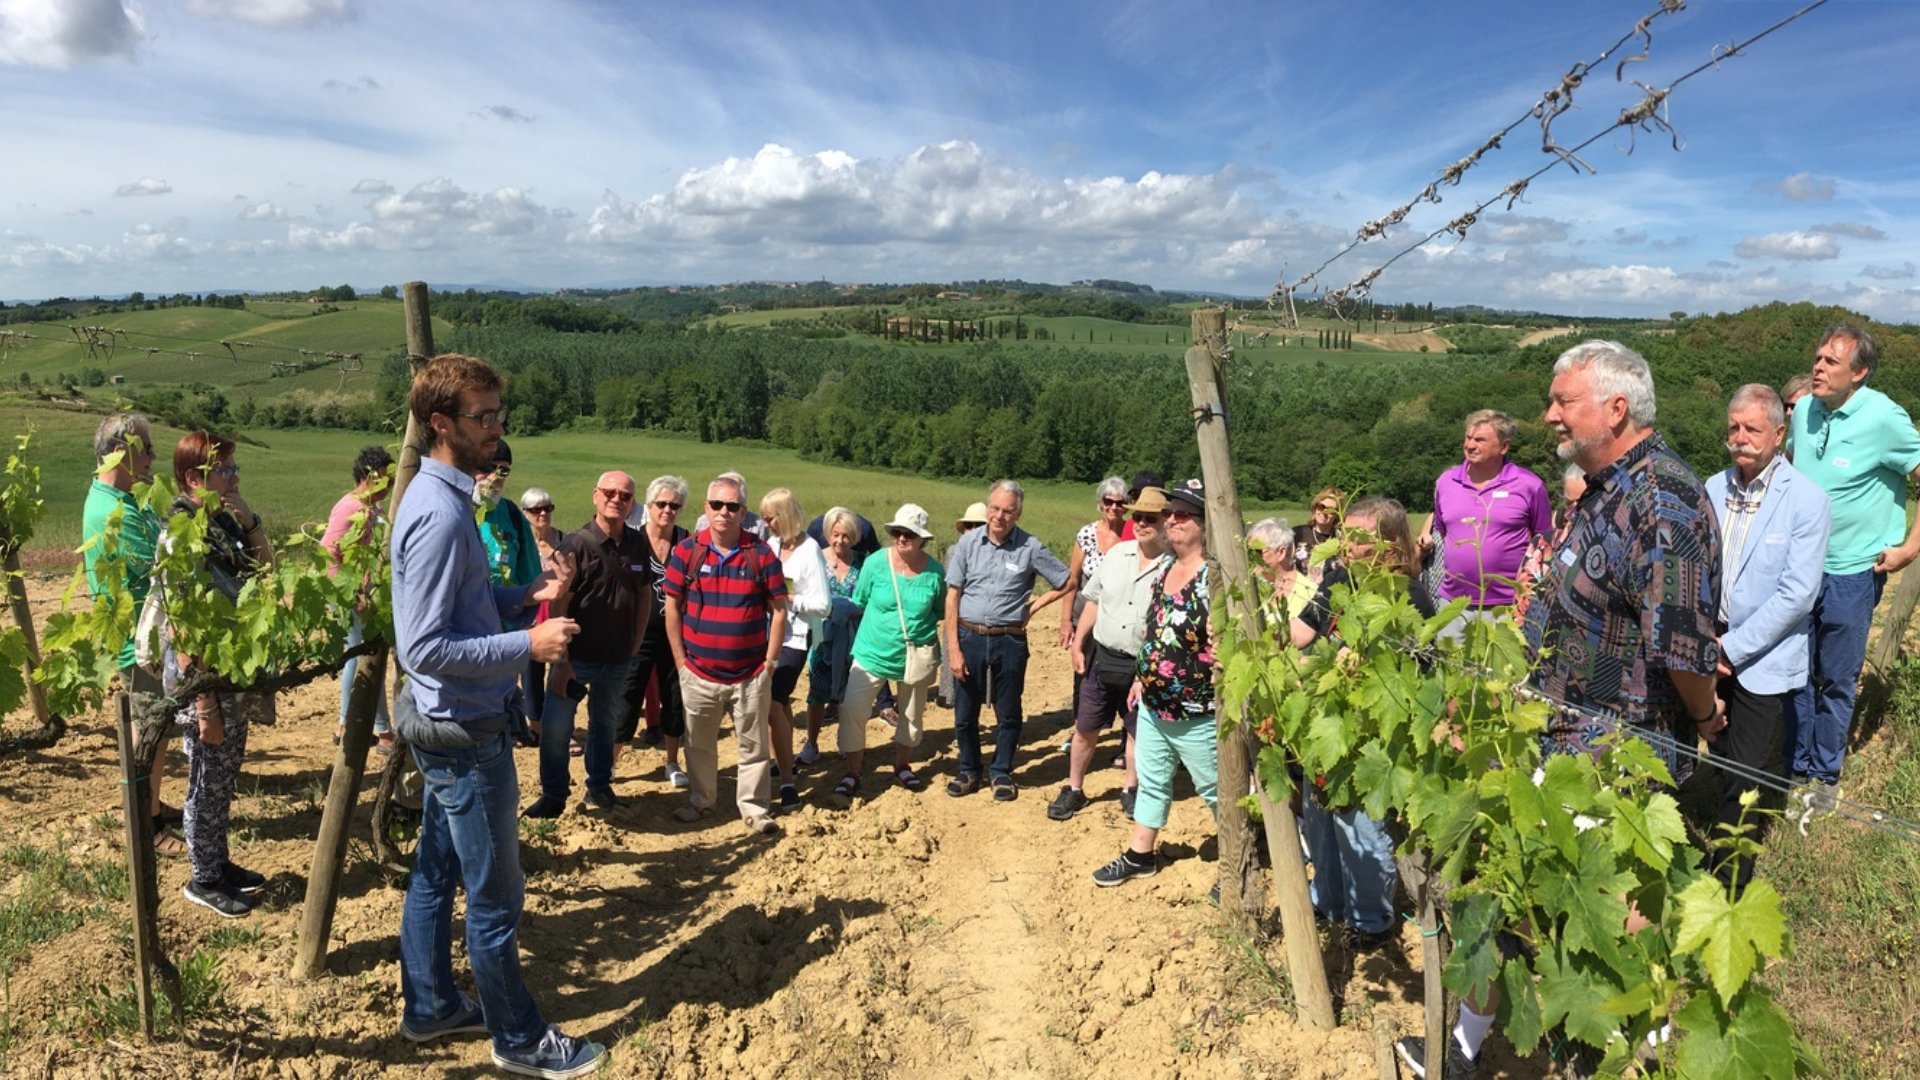 The visit to the vineyard of Tenuta Montechiaro, on the Chianti's hills near Siena